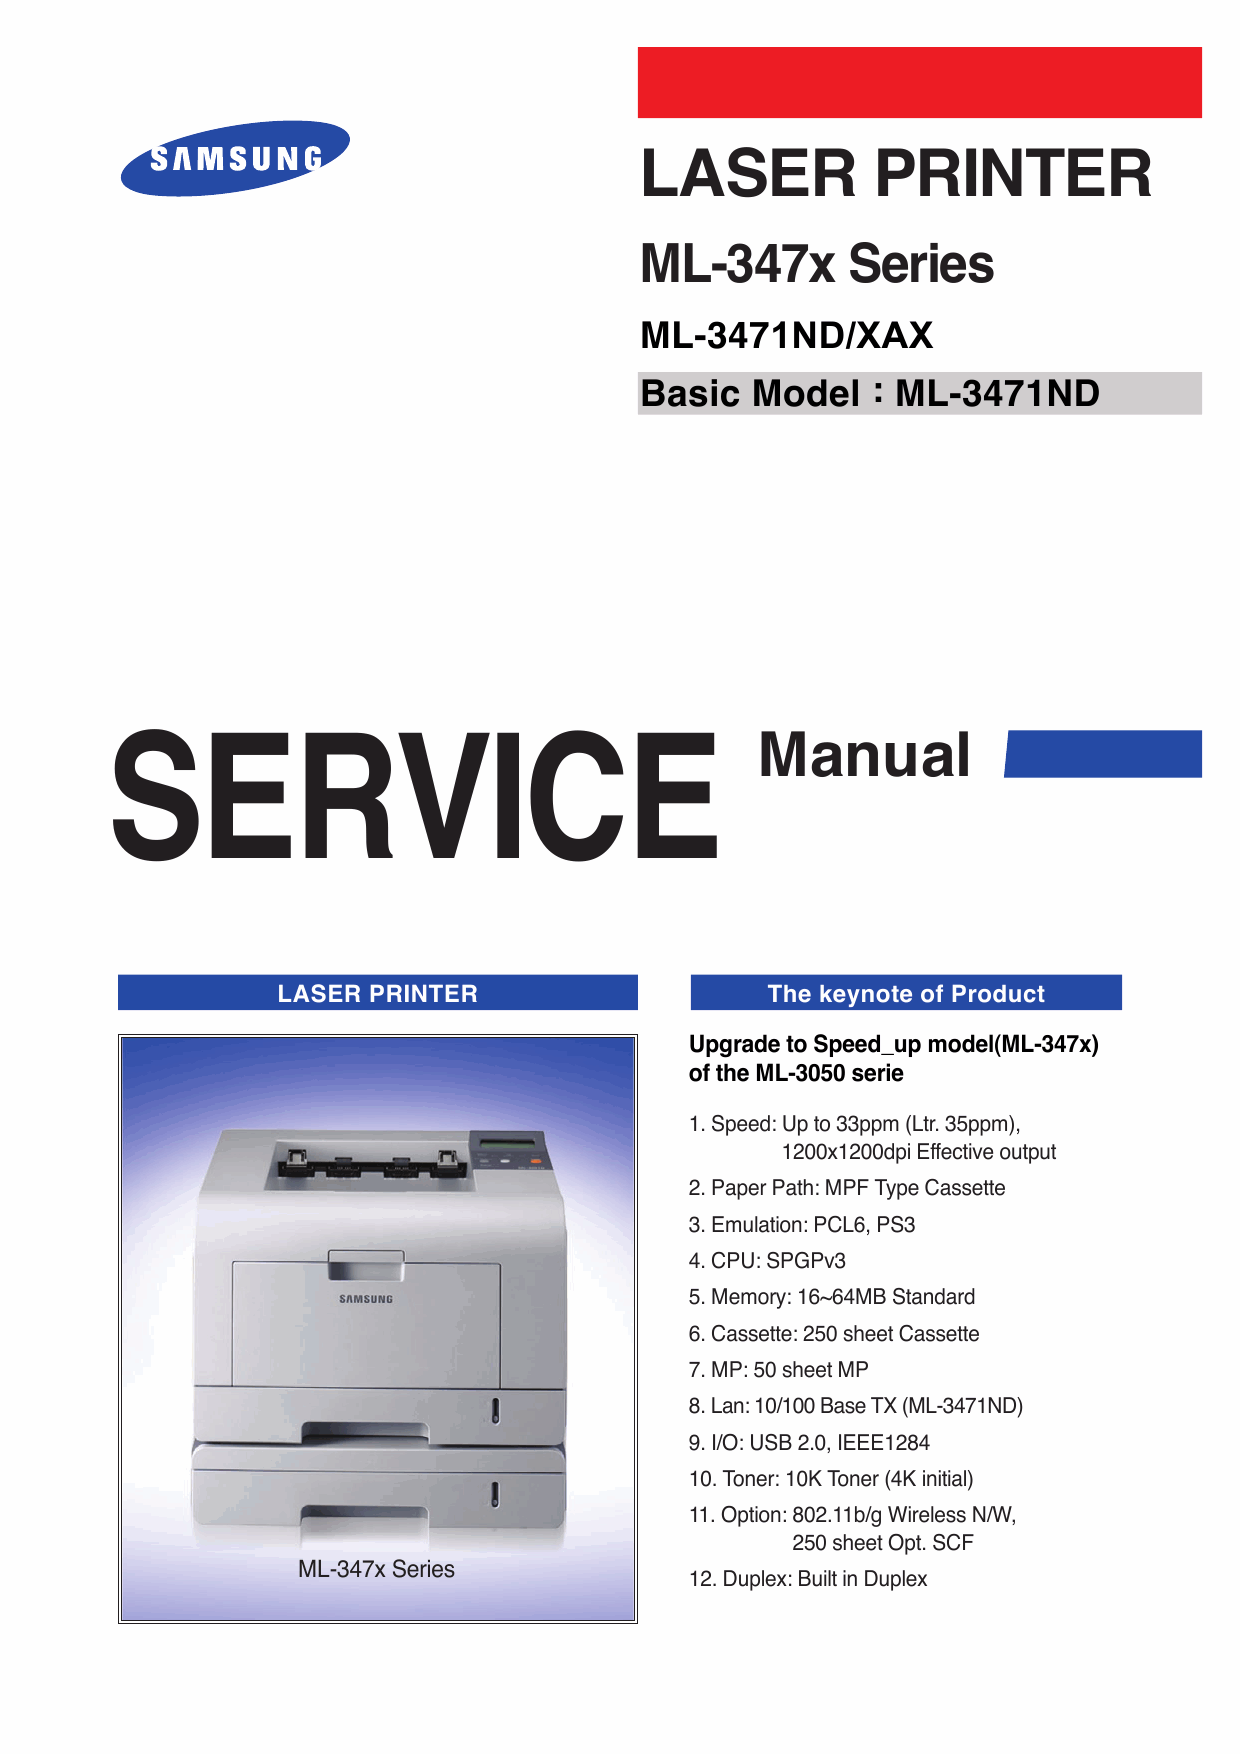 Samsung Laser-Printer ML-3471ND Parts and Service Manual-1